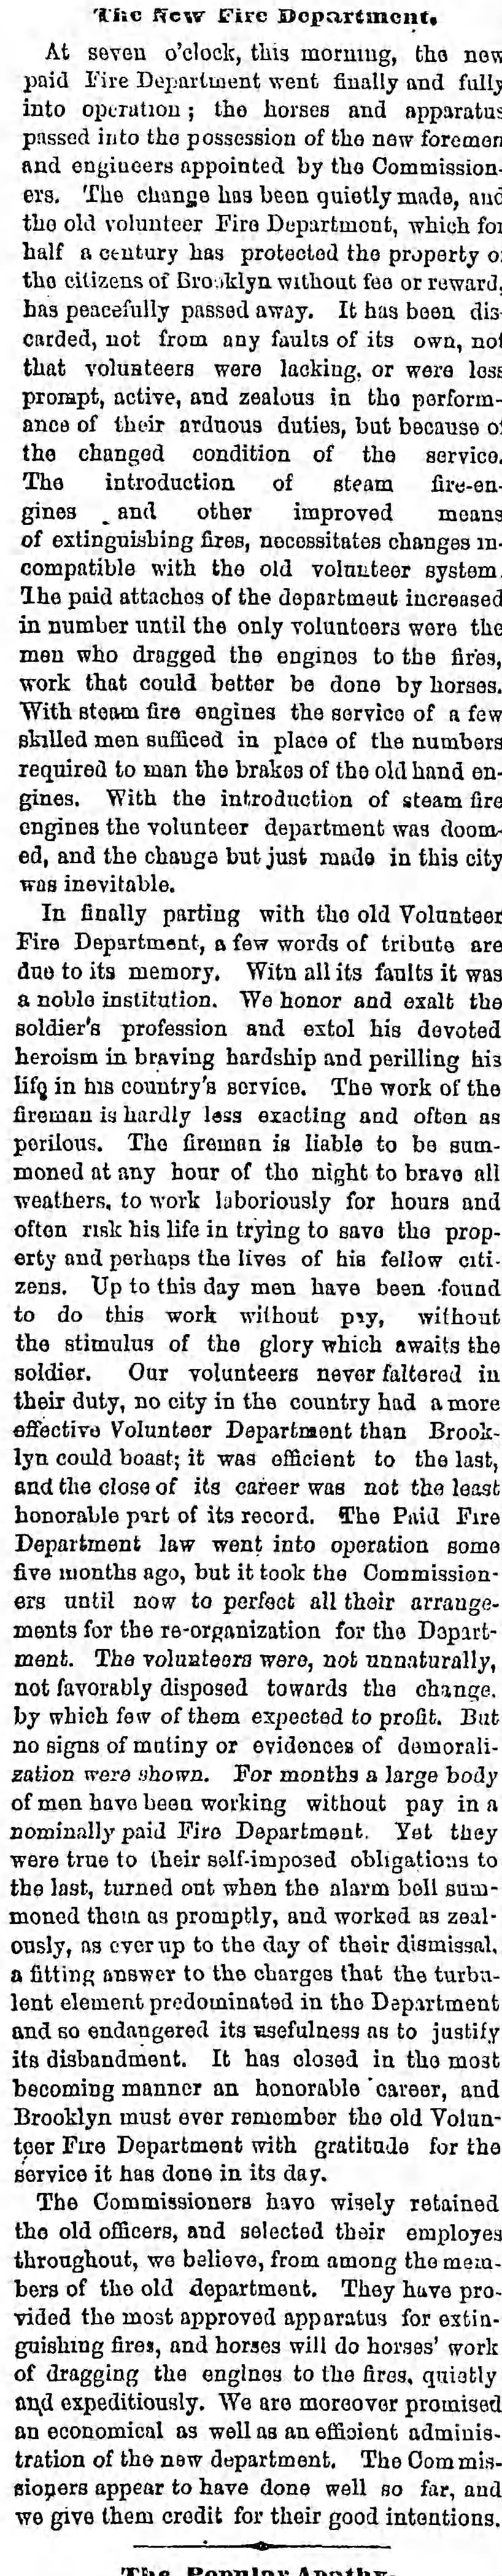 City of Brooklyn Fire Department September 1869